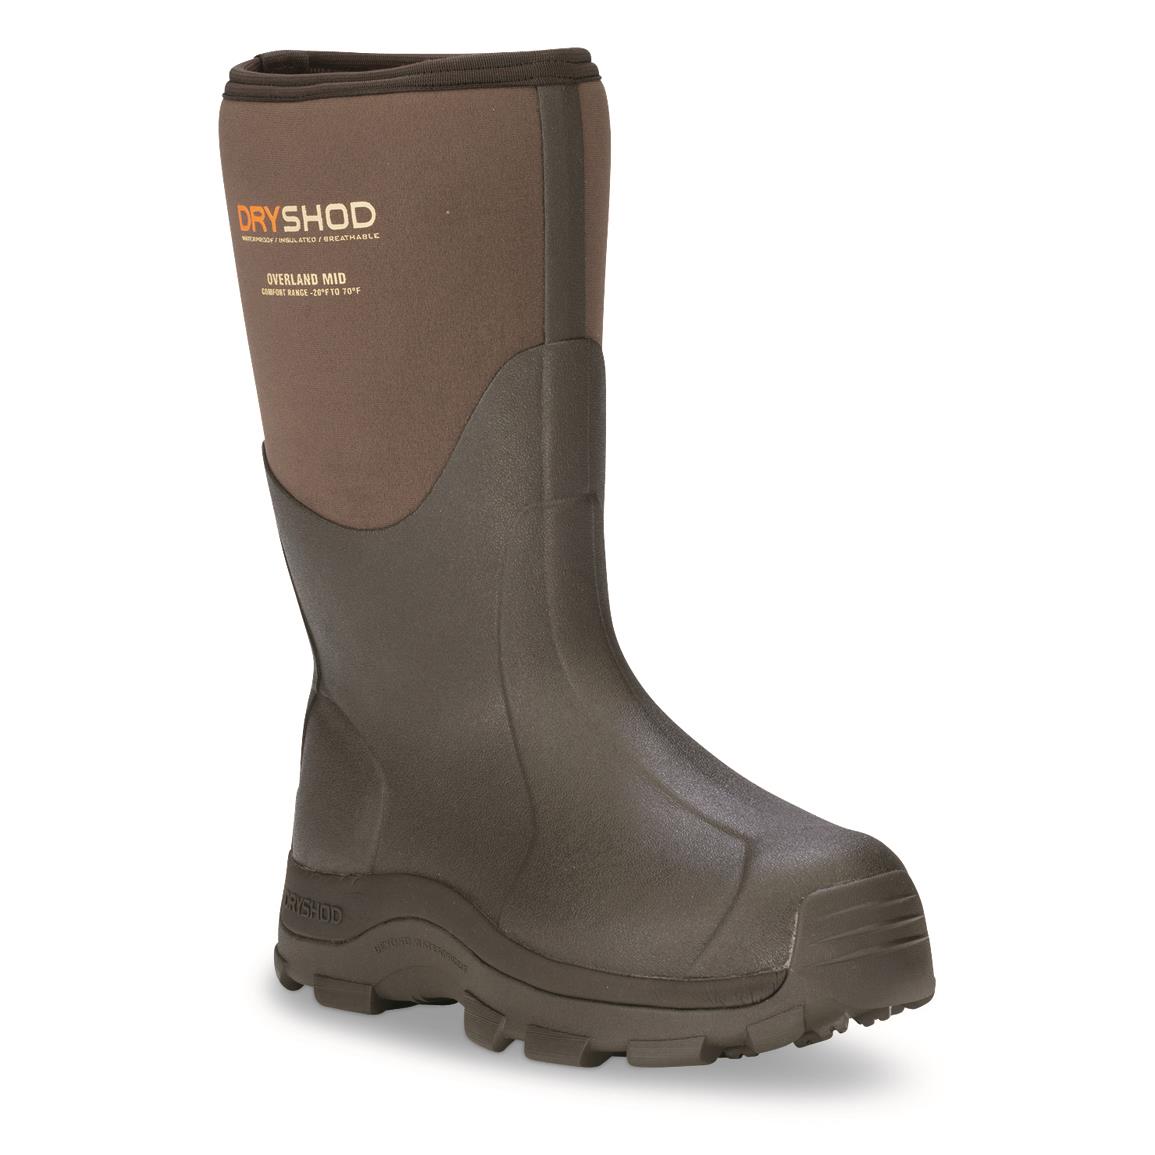 DryShod Overland Mid Premium Men's Neoprene Rubber Sport Boots, -20°F, Khaki